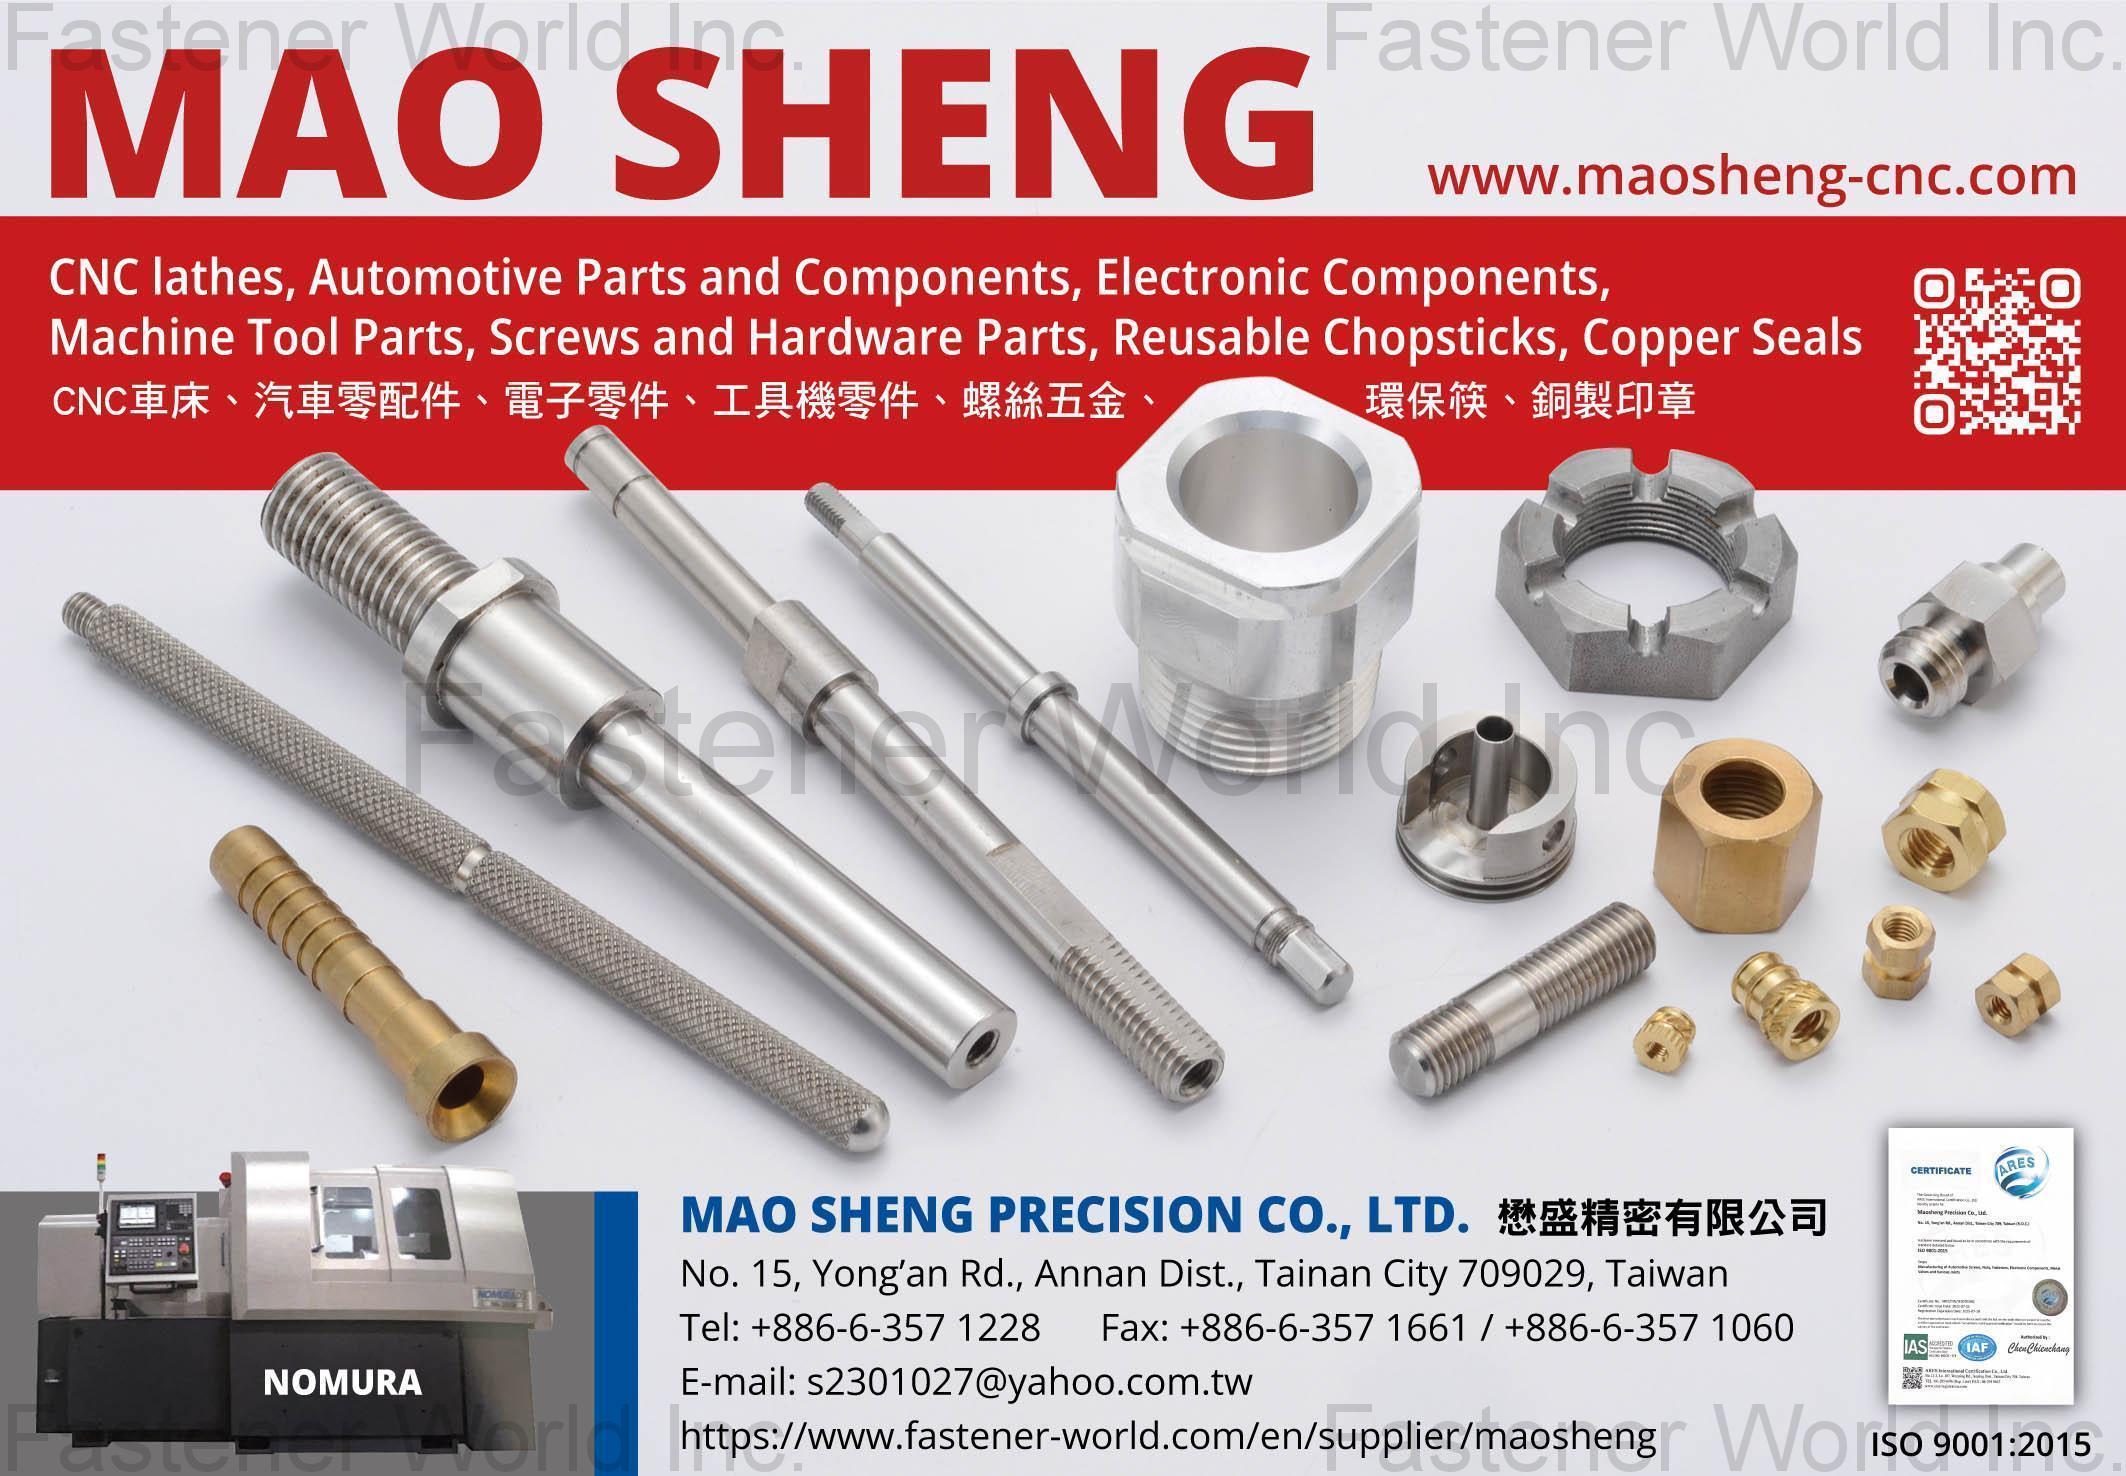 MAO SHENG PRECISION CO., LTD. , CNC Lathes, Automotive Parts and Components, Electronic Components, Machine Tool Parts, Screws and Hardware Parts, Reusable Chopsticks, Cooper Seals